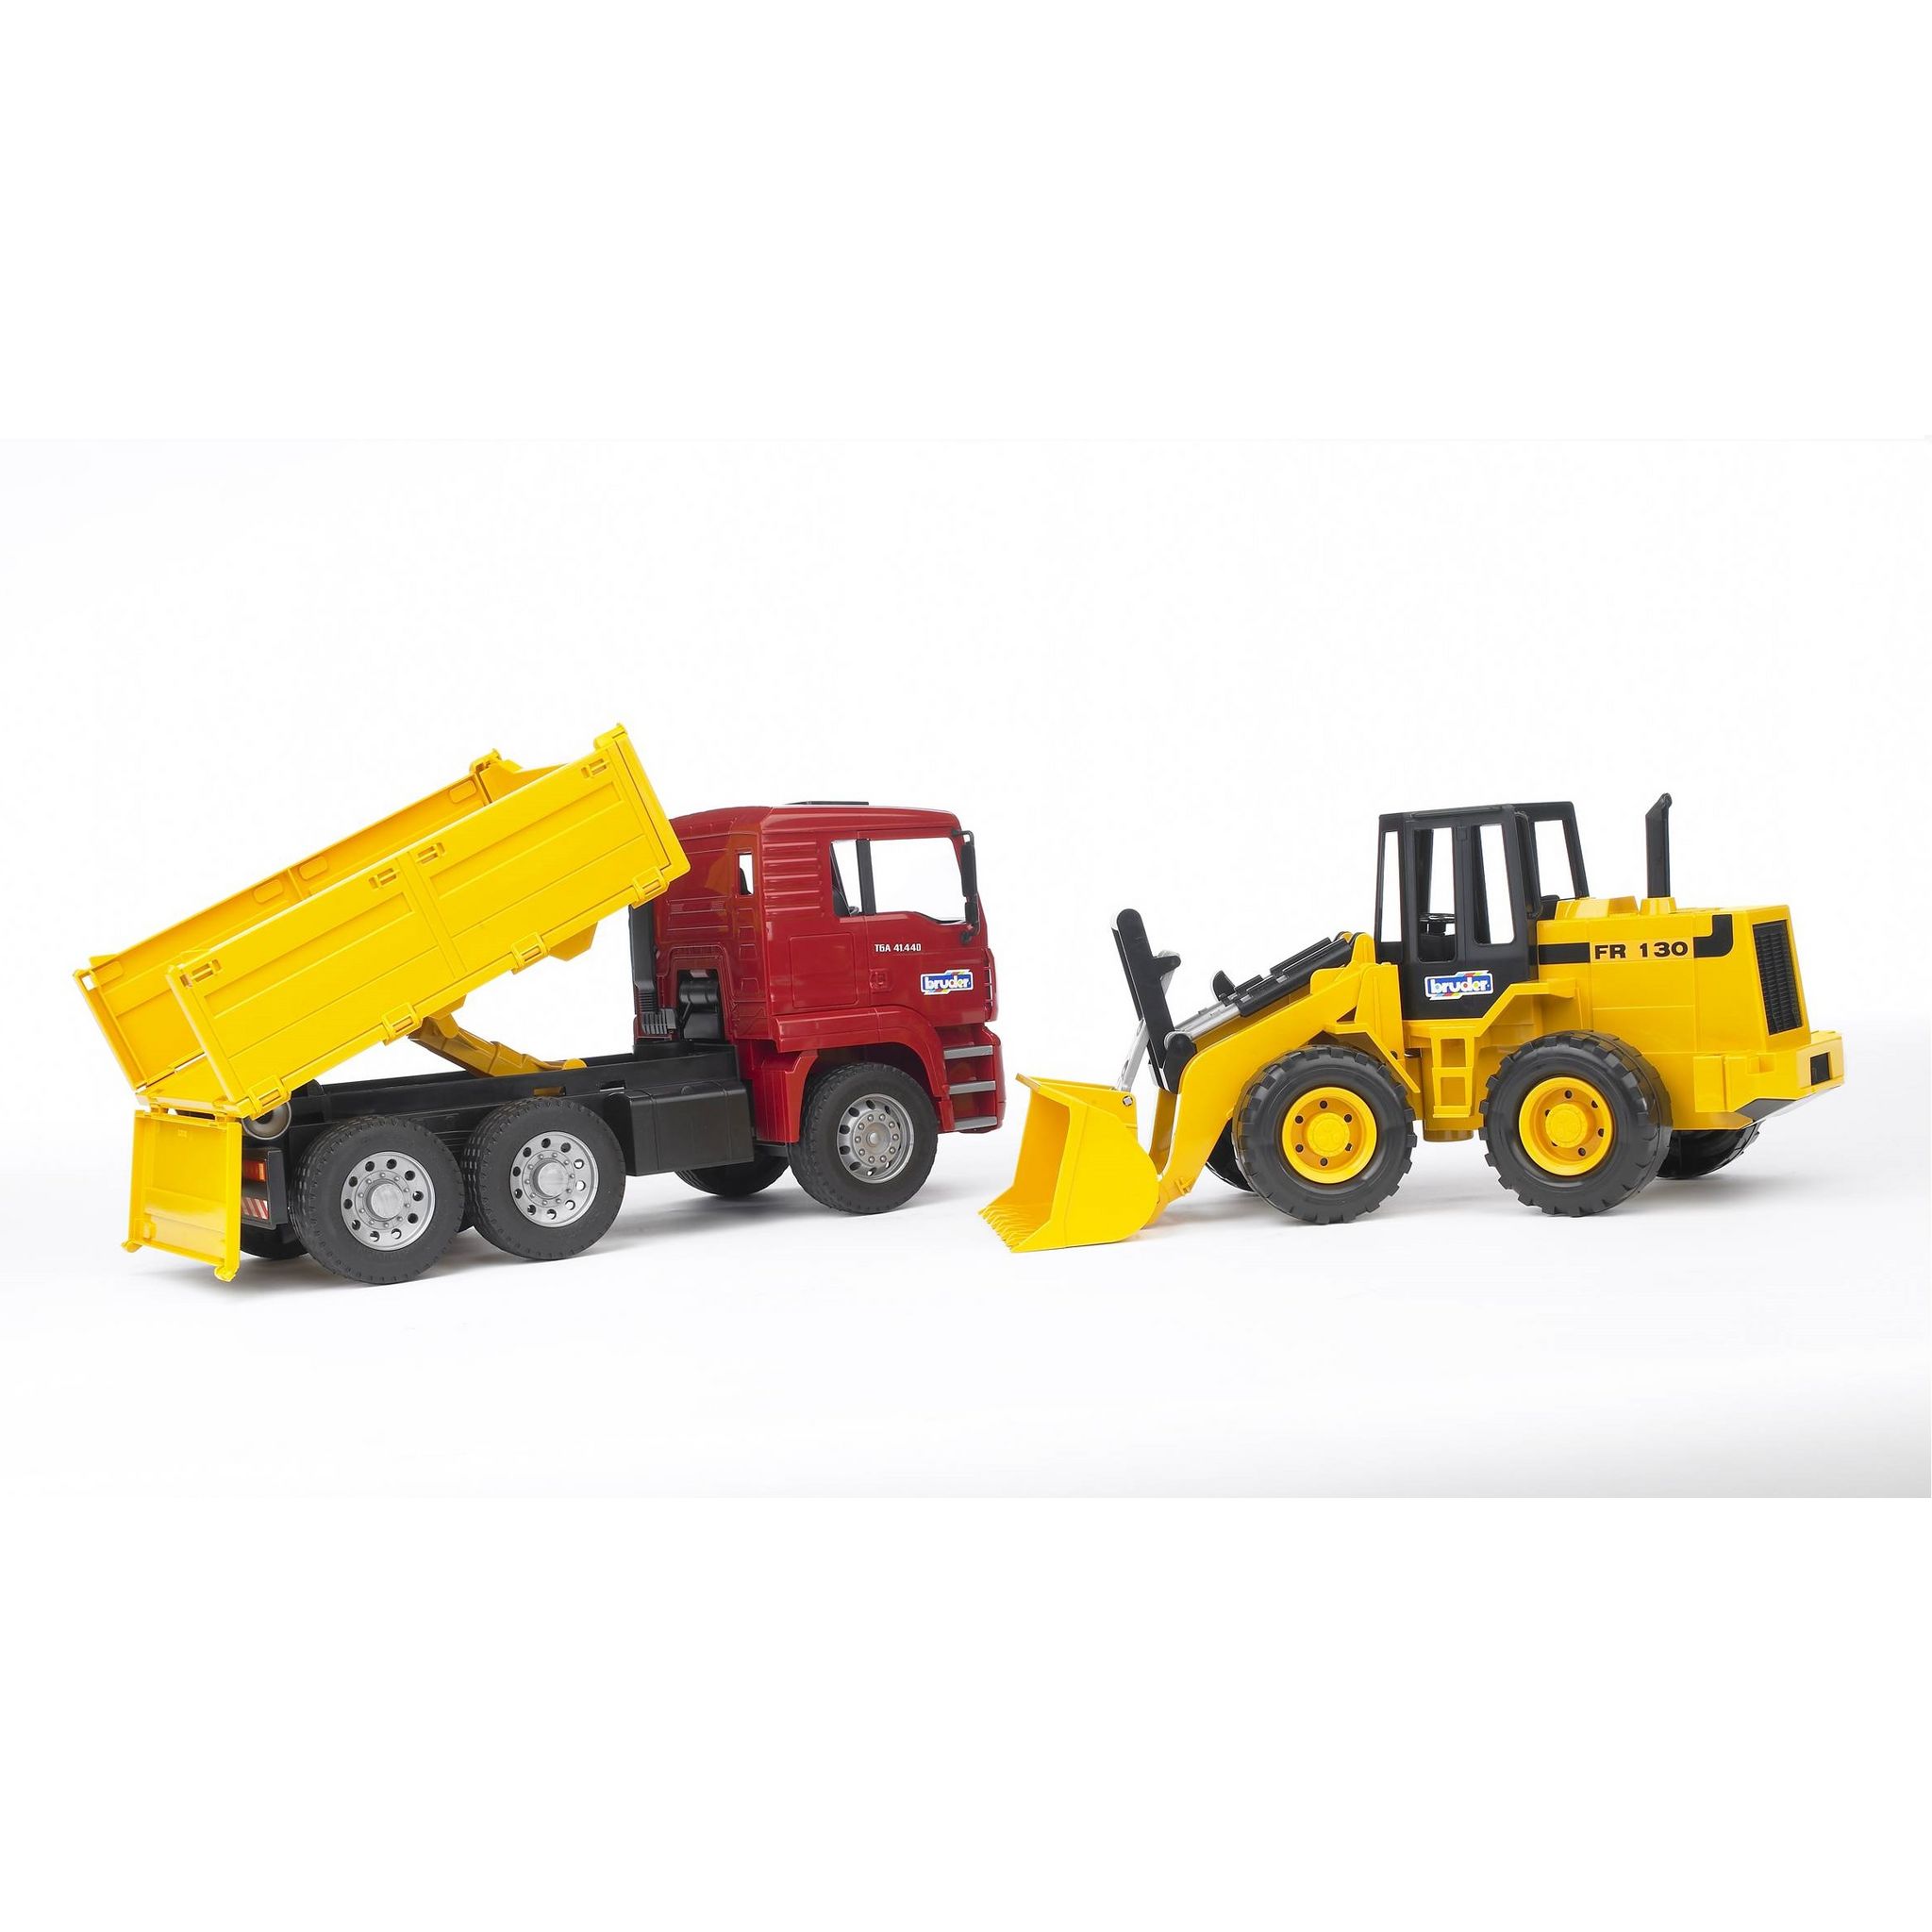 Camions et engins de chantier jouets